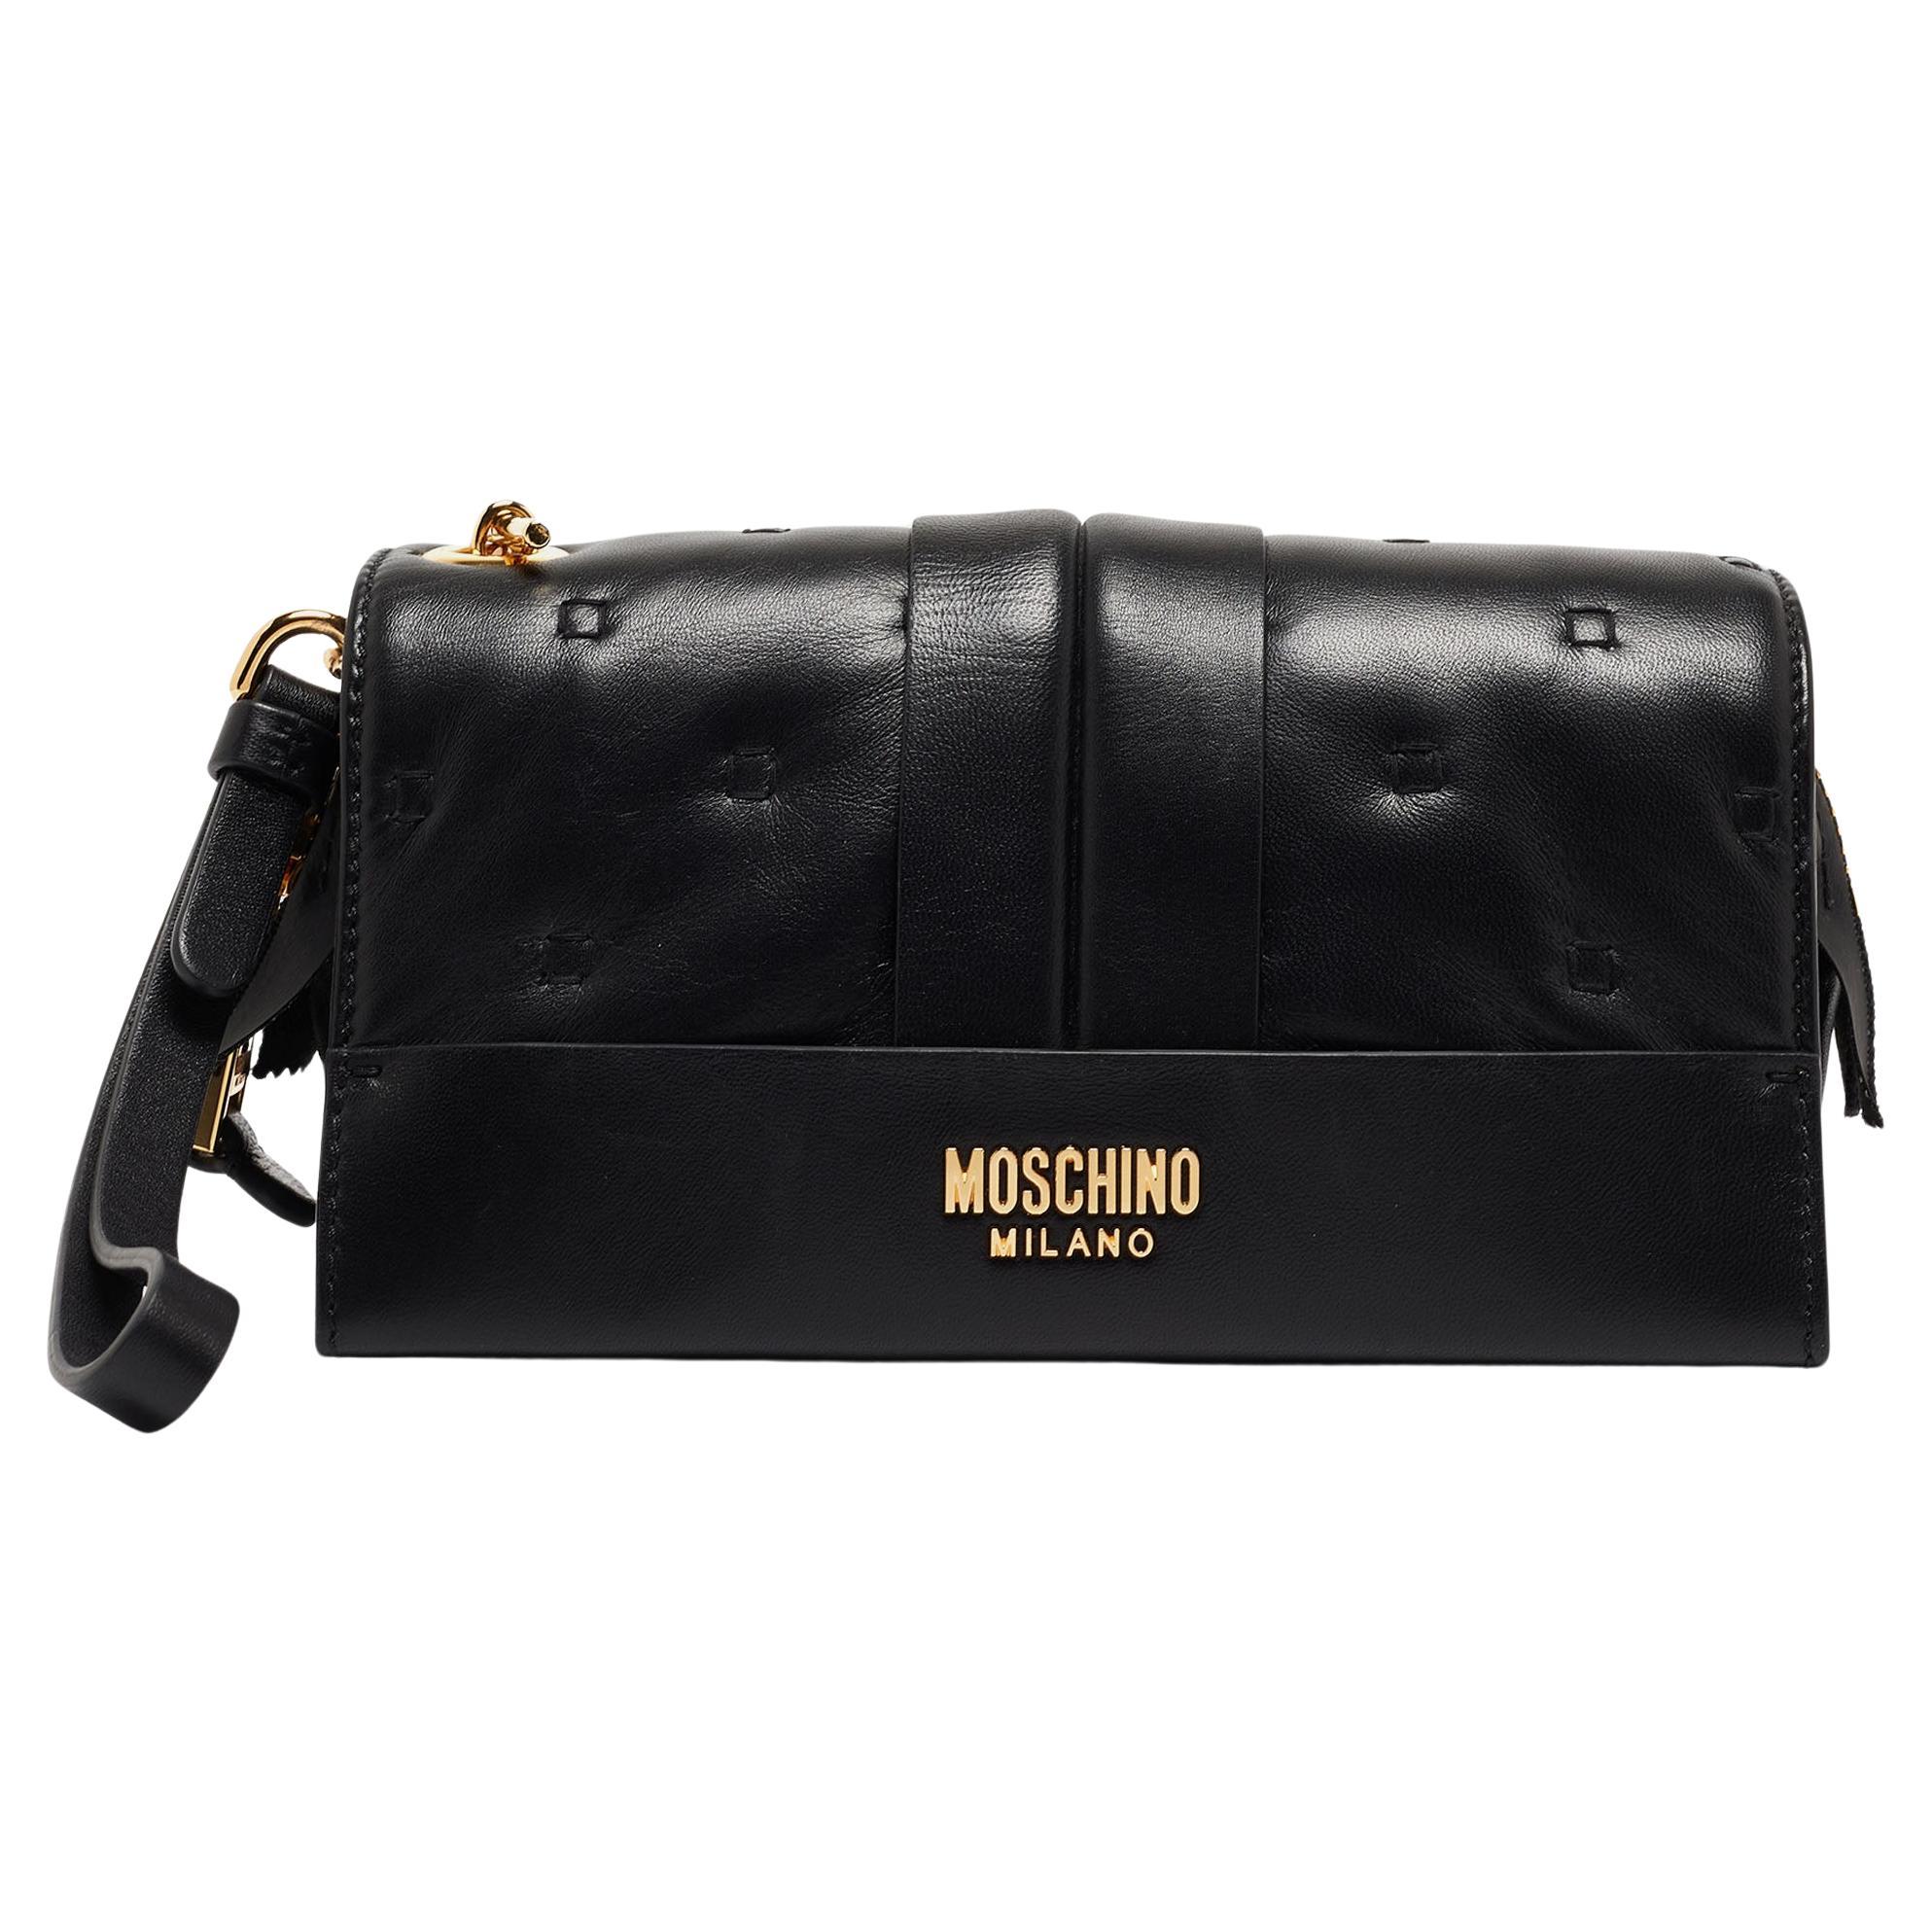 Moschino Black Leather Wristlet Clutch